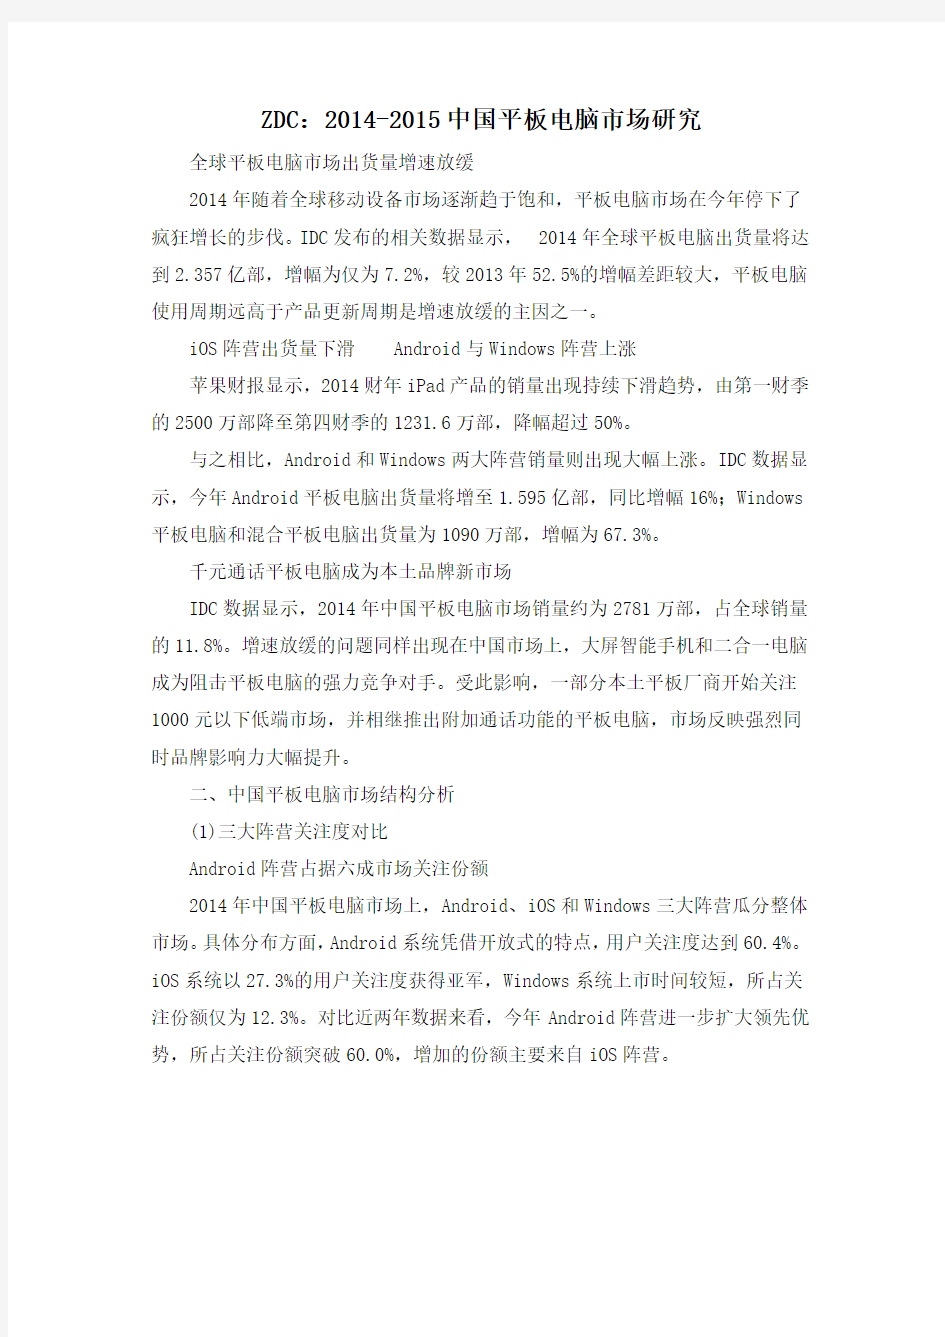 ZDC：2014-2015中国平板电脑市场研究